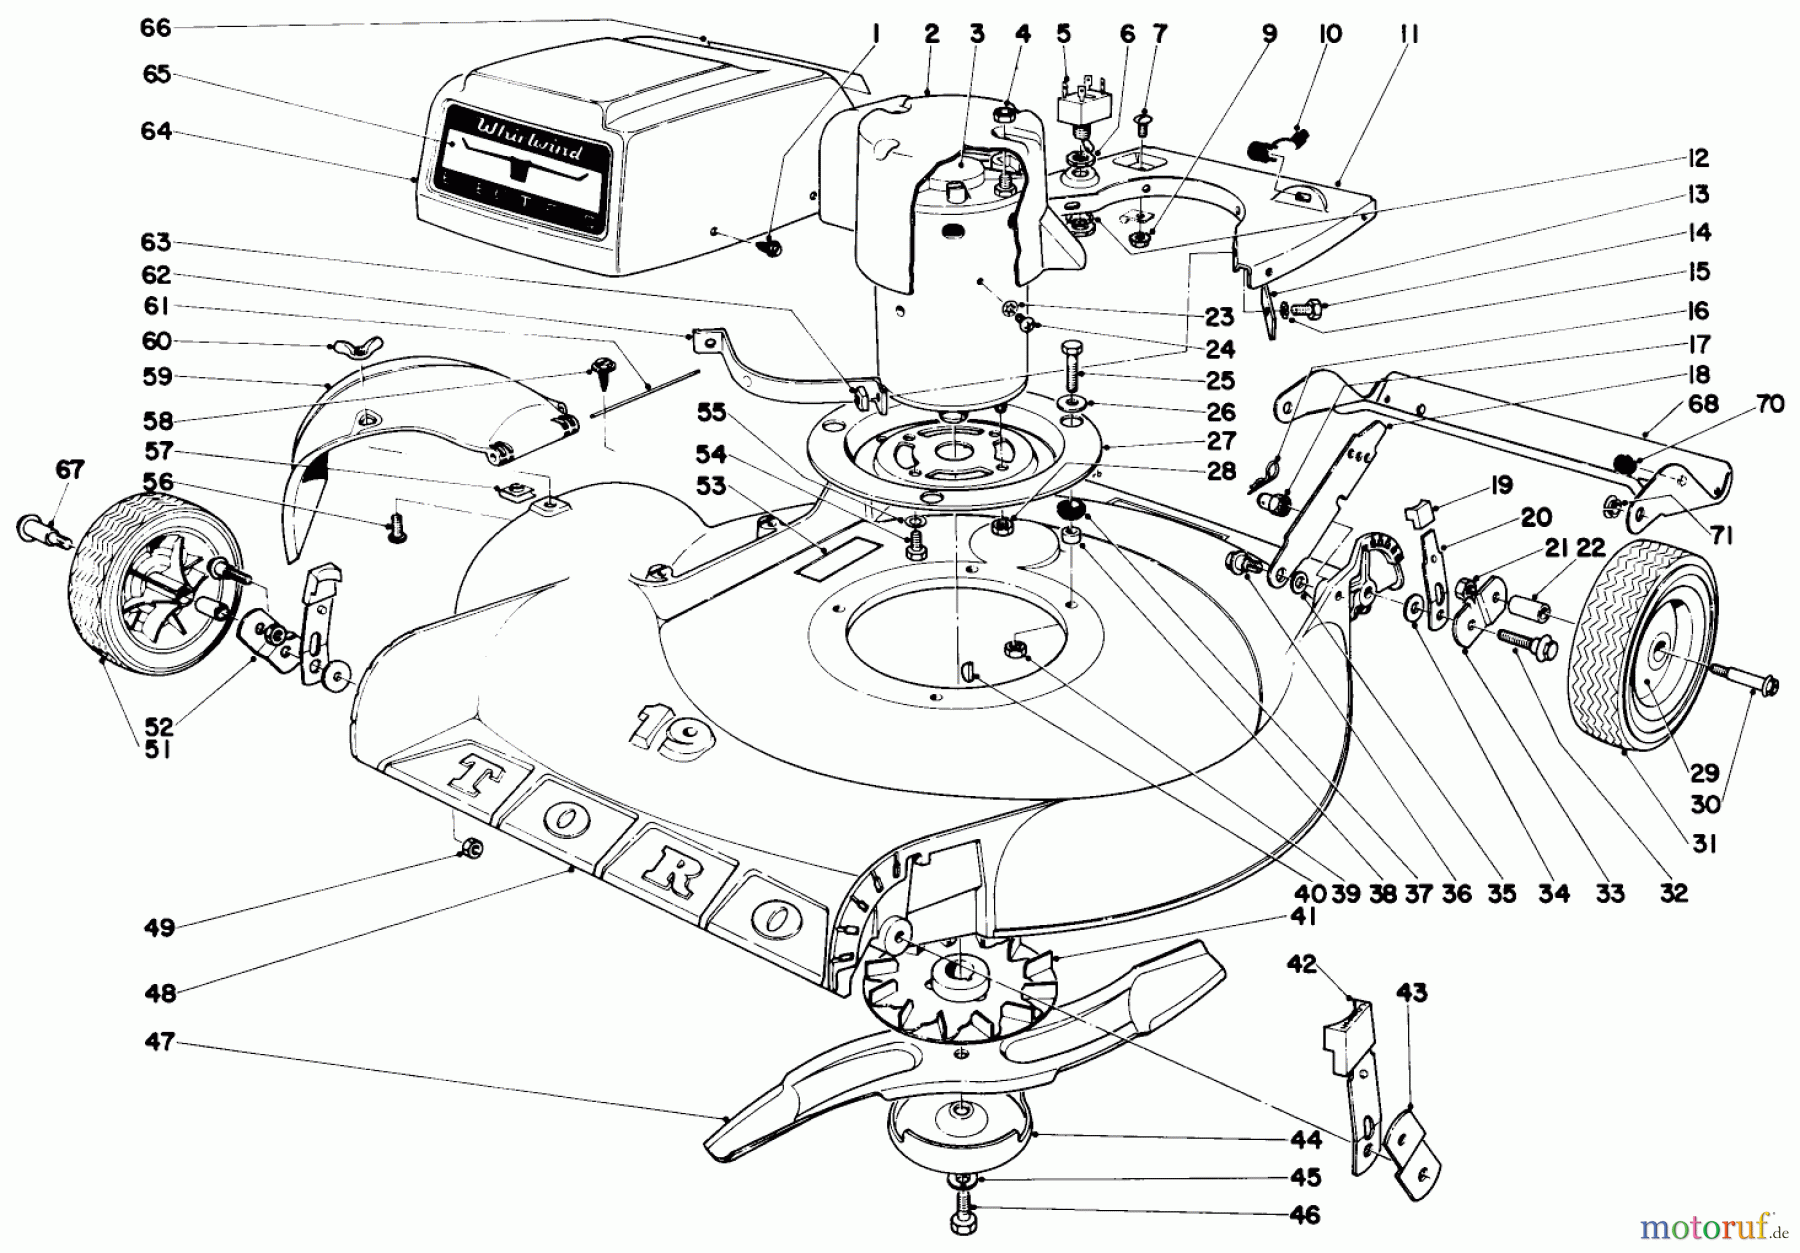  Toro Neu Mowers, Electric 18301 - Toro Electric Whirlwind Lawnmower, 1970 (0000001-0999999) MAIN FRAME ASSEMBLY